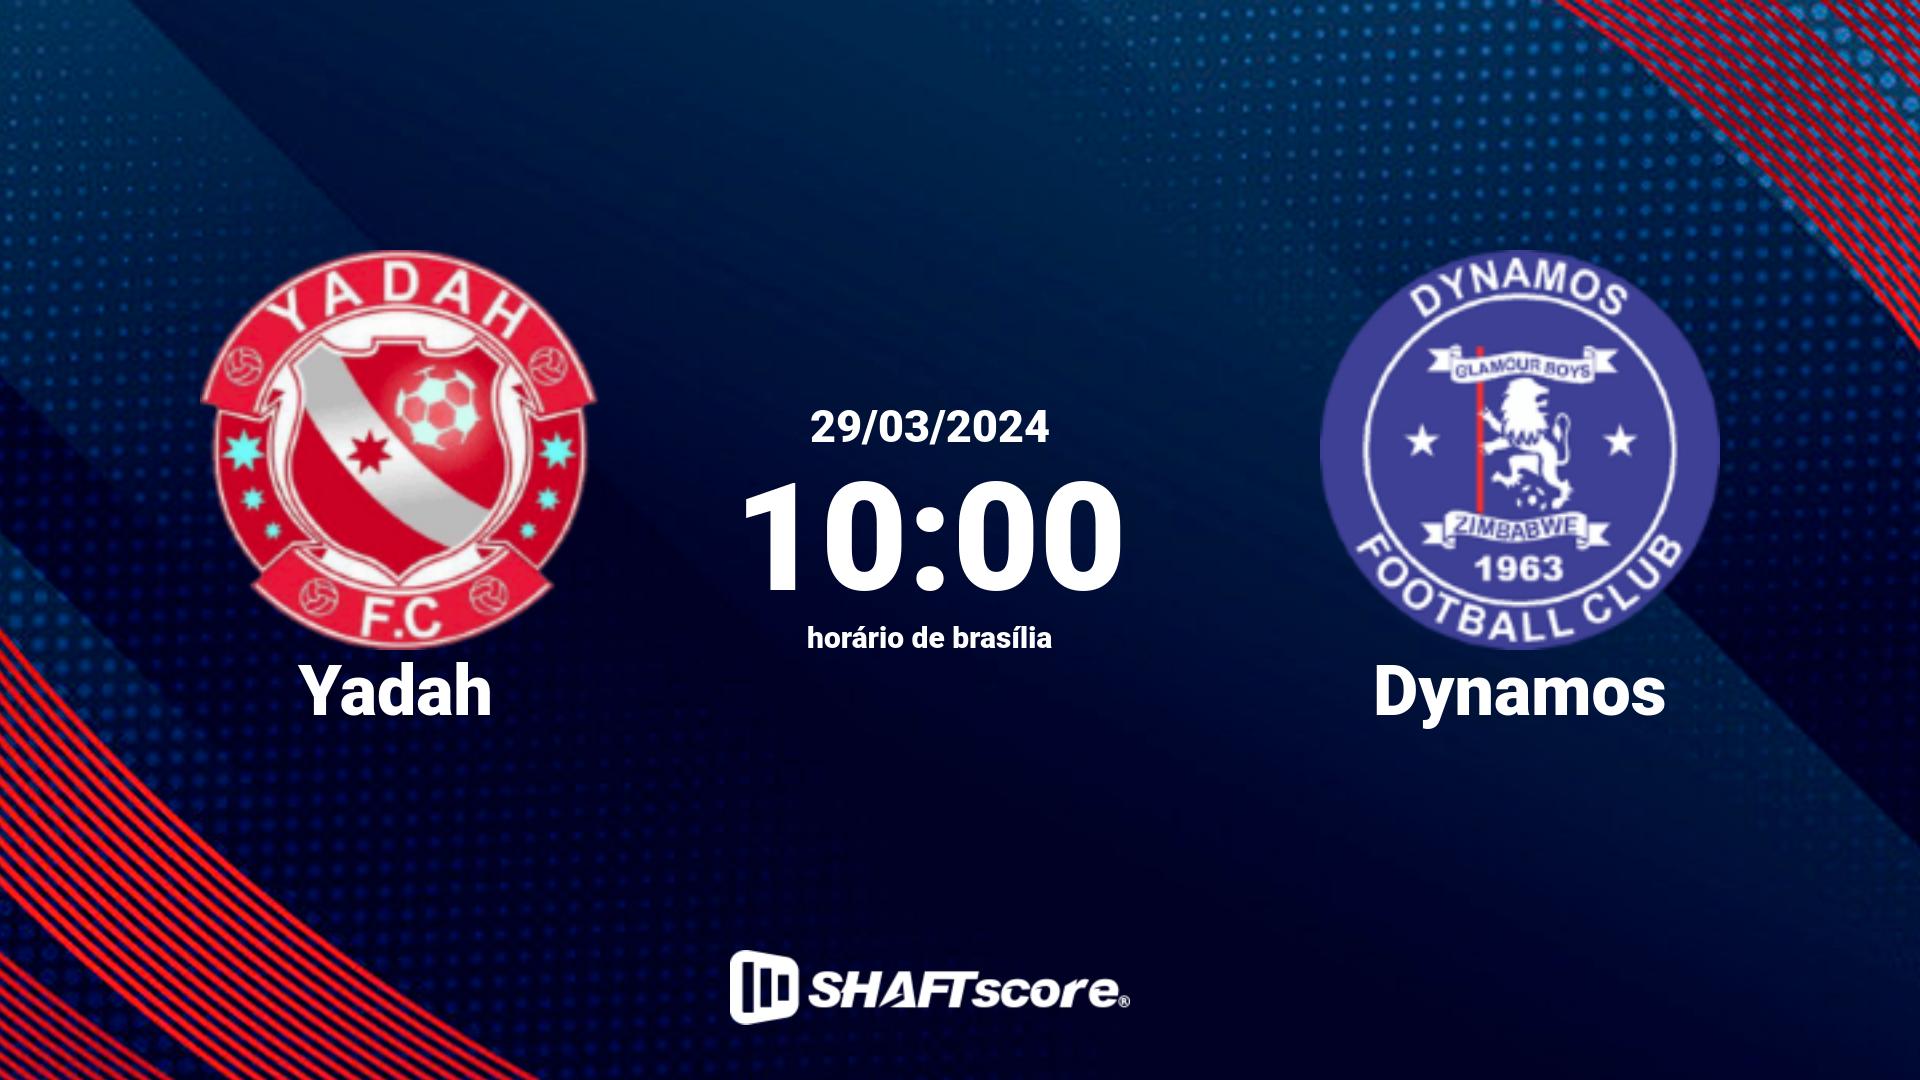 Estatísticas do jogo Yadah vs Dynamos 29.03 10:00